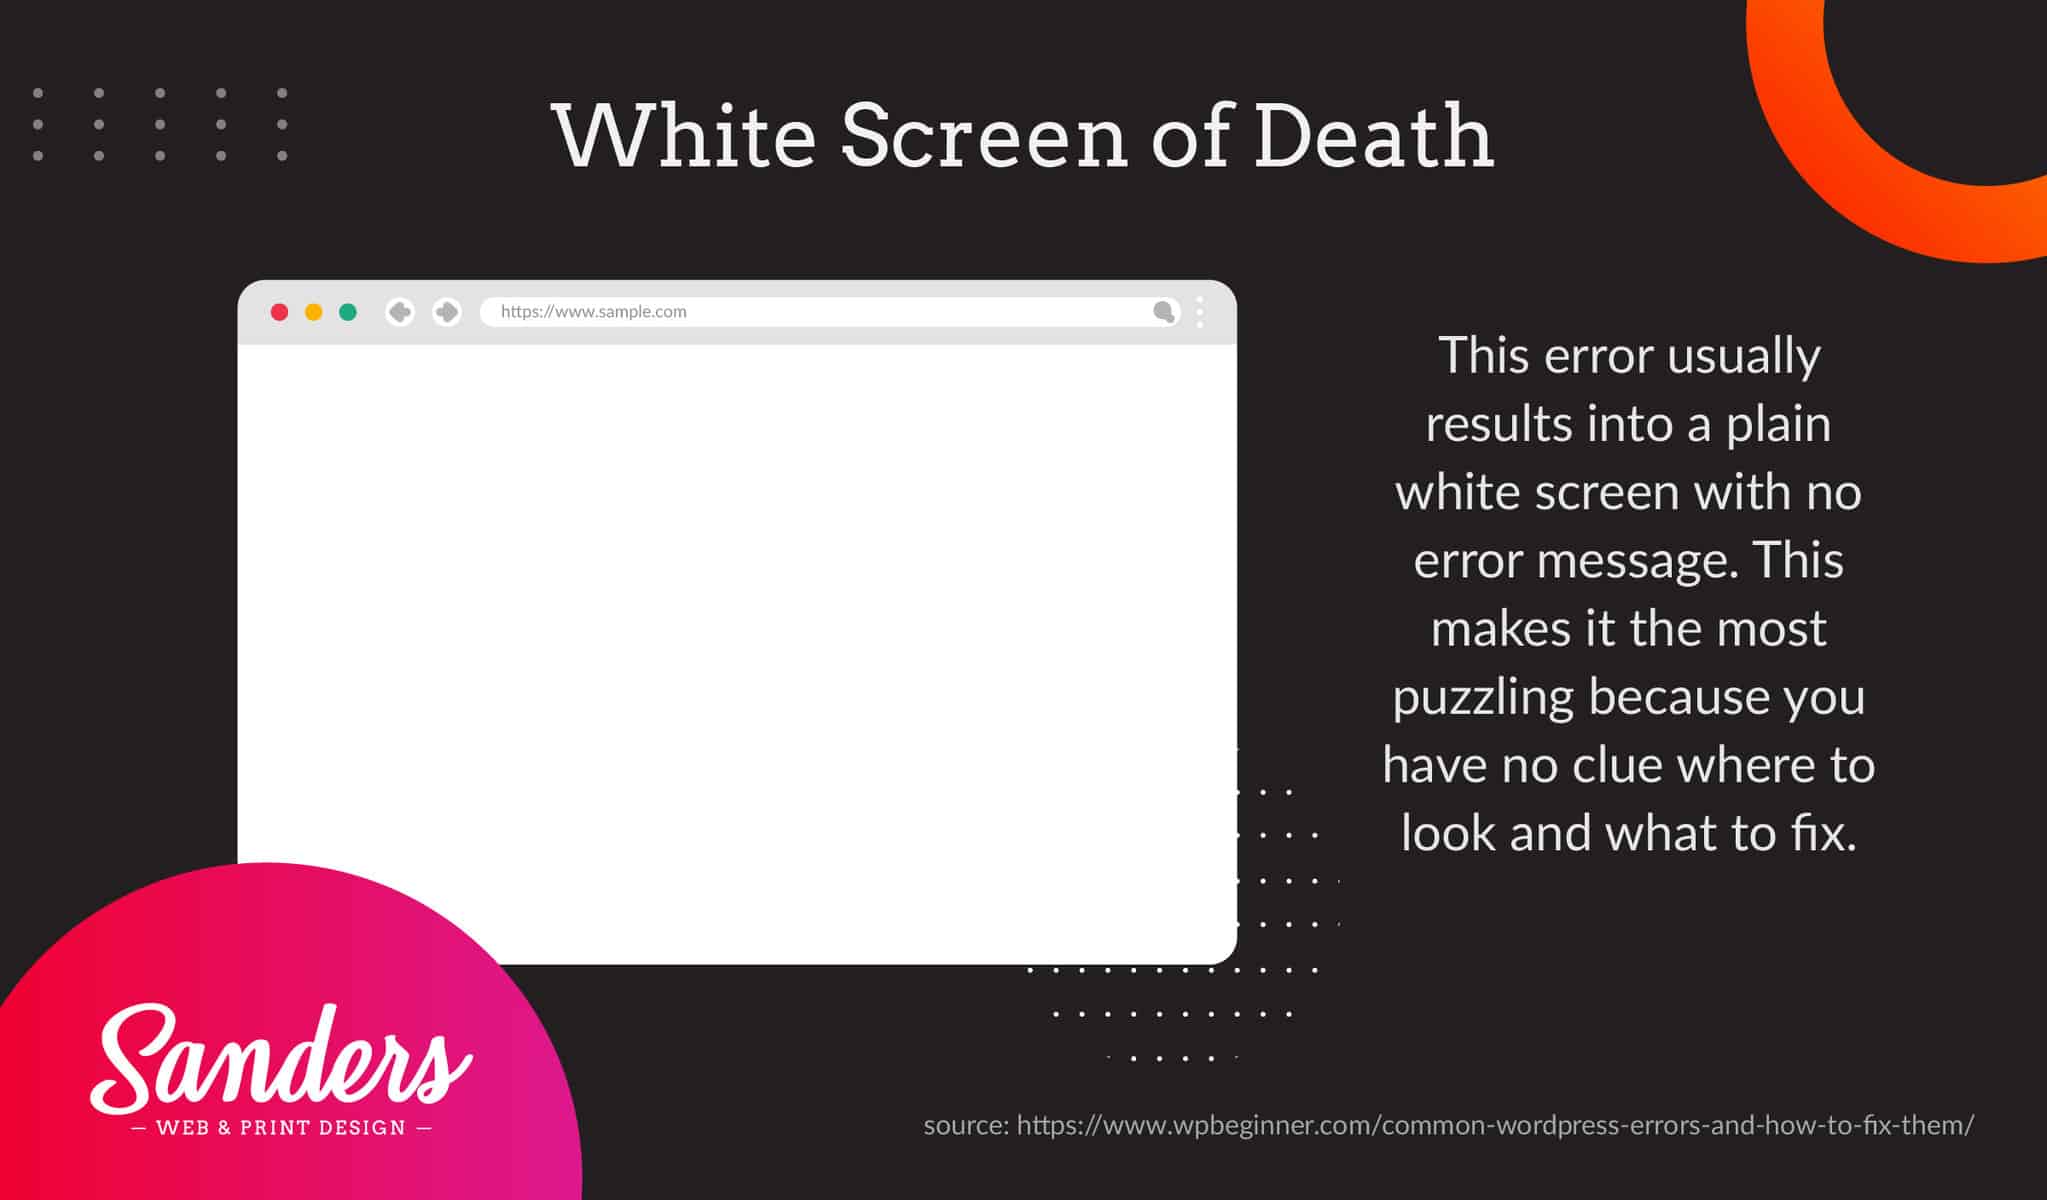 White screen of death 2 - Sanders Design